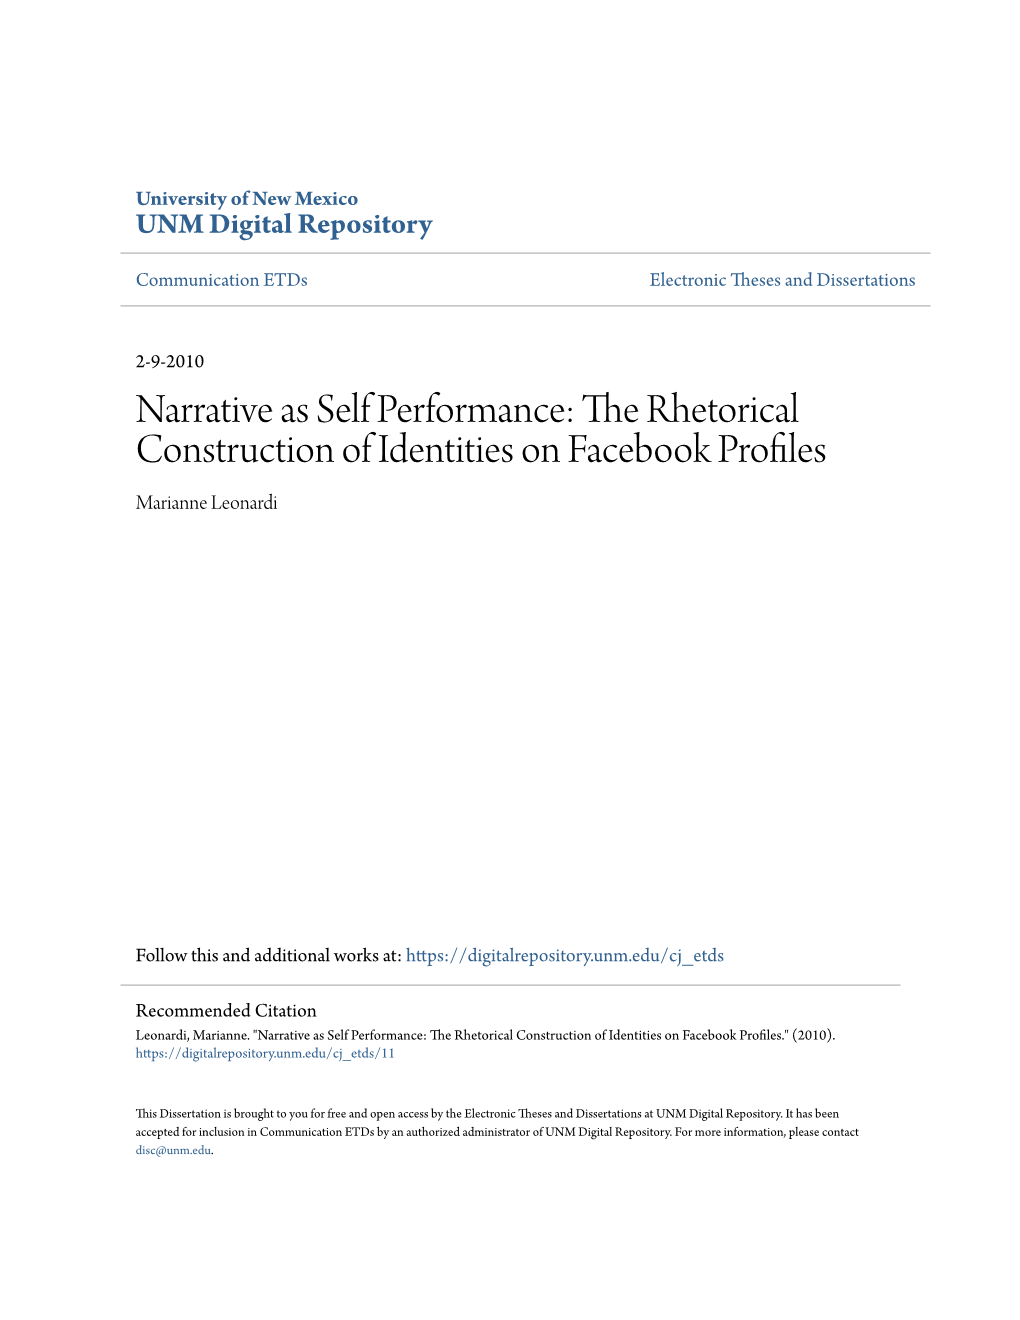 Narrative As Self Performance: the Rhetorical Construction of Identities on Facebook Profiles Marianne Leonardi